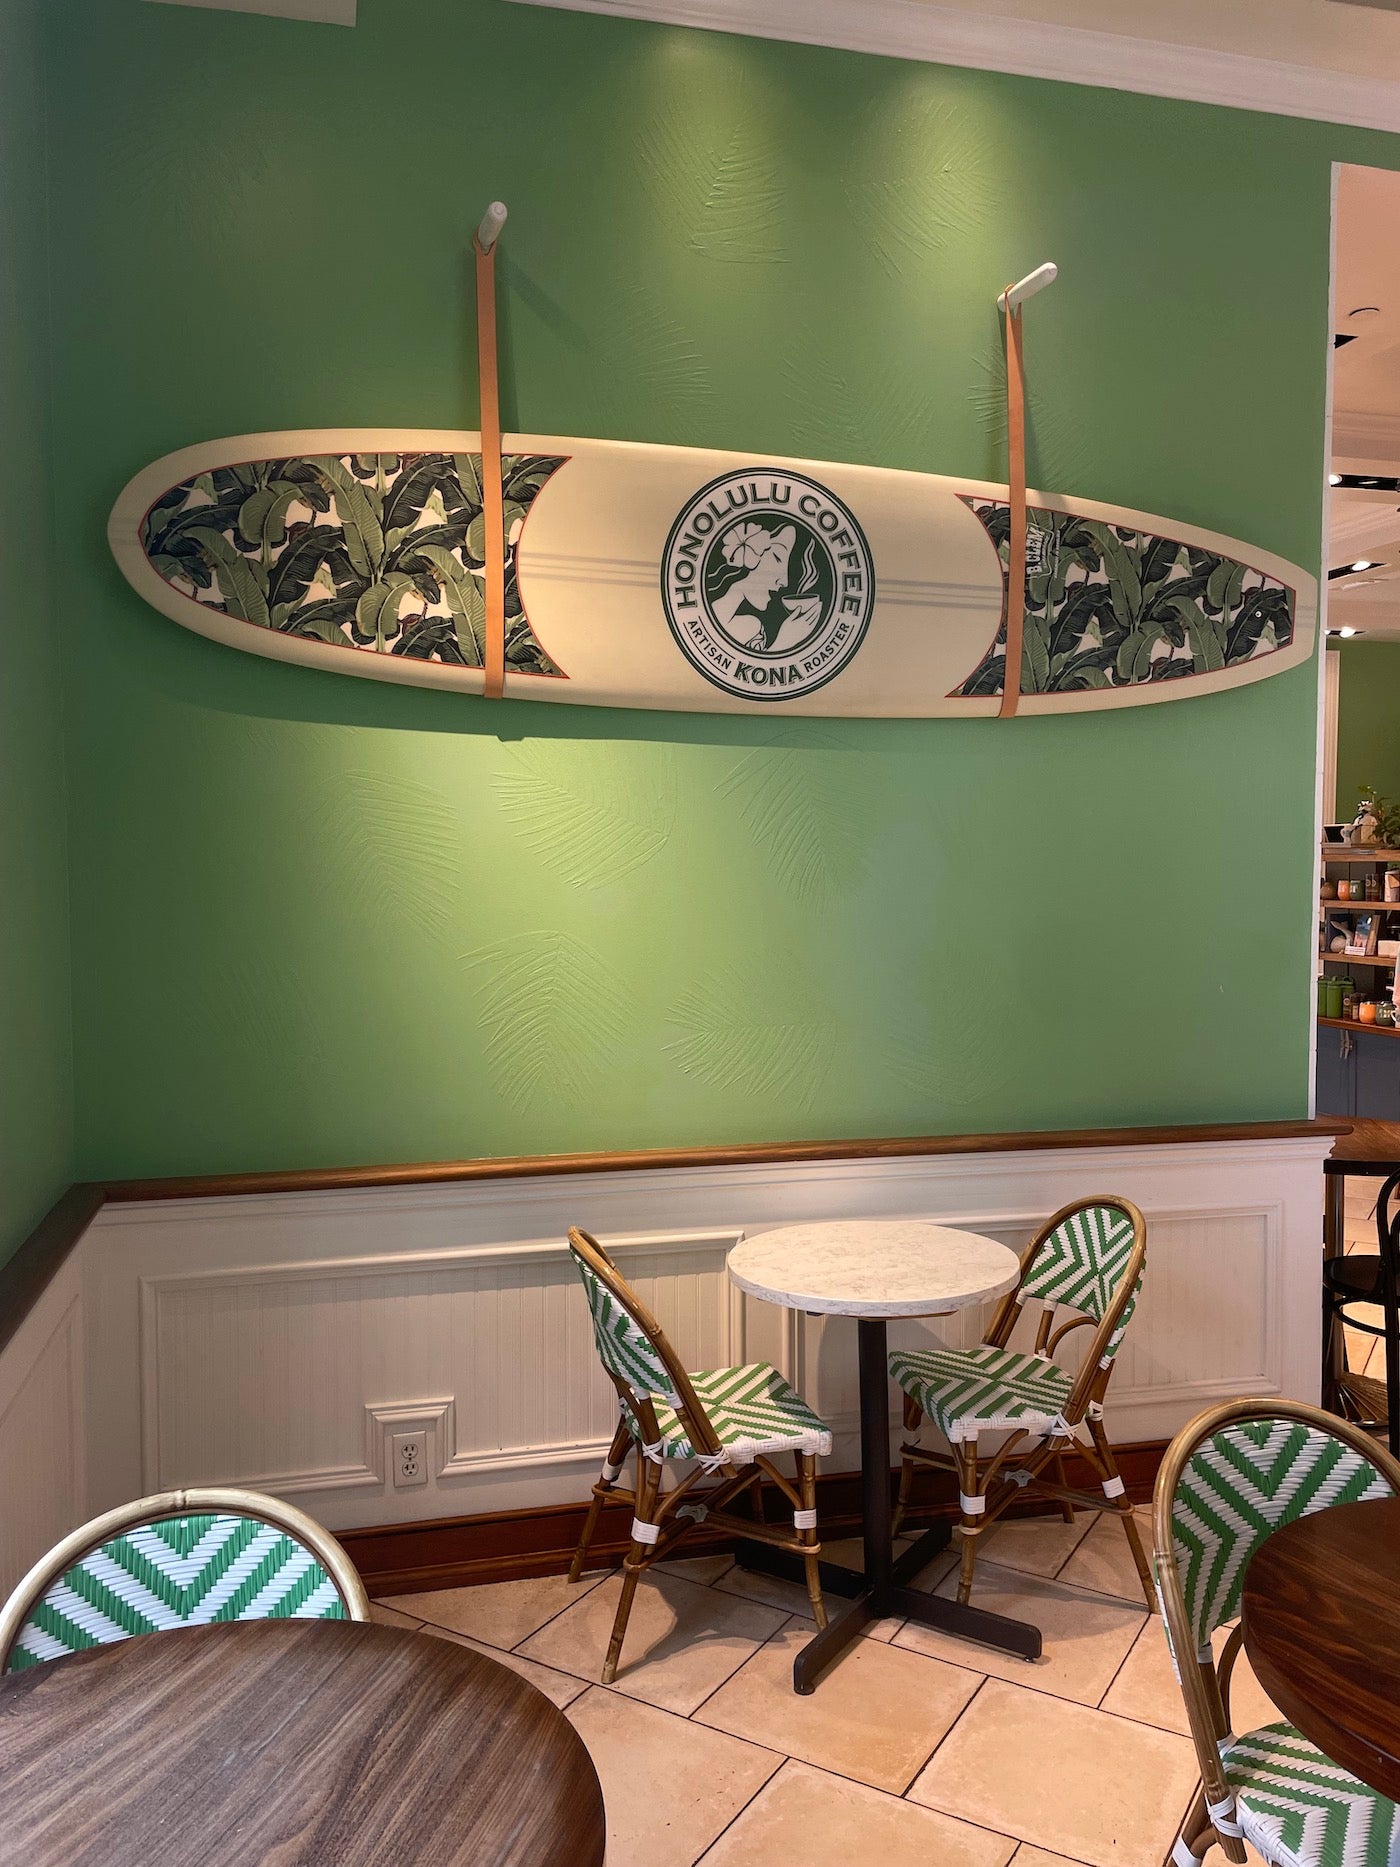 The custom surfboard inside the Moana Surfrider hotel